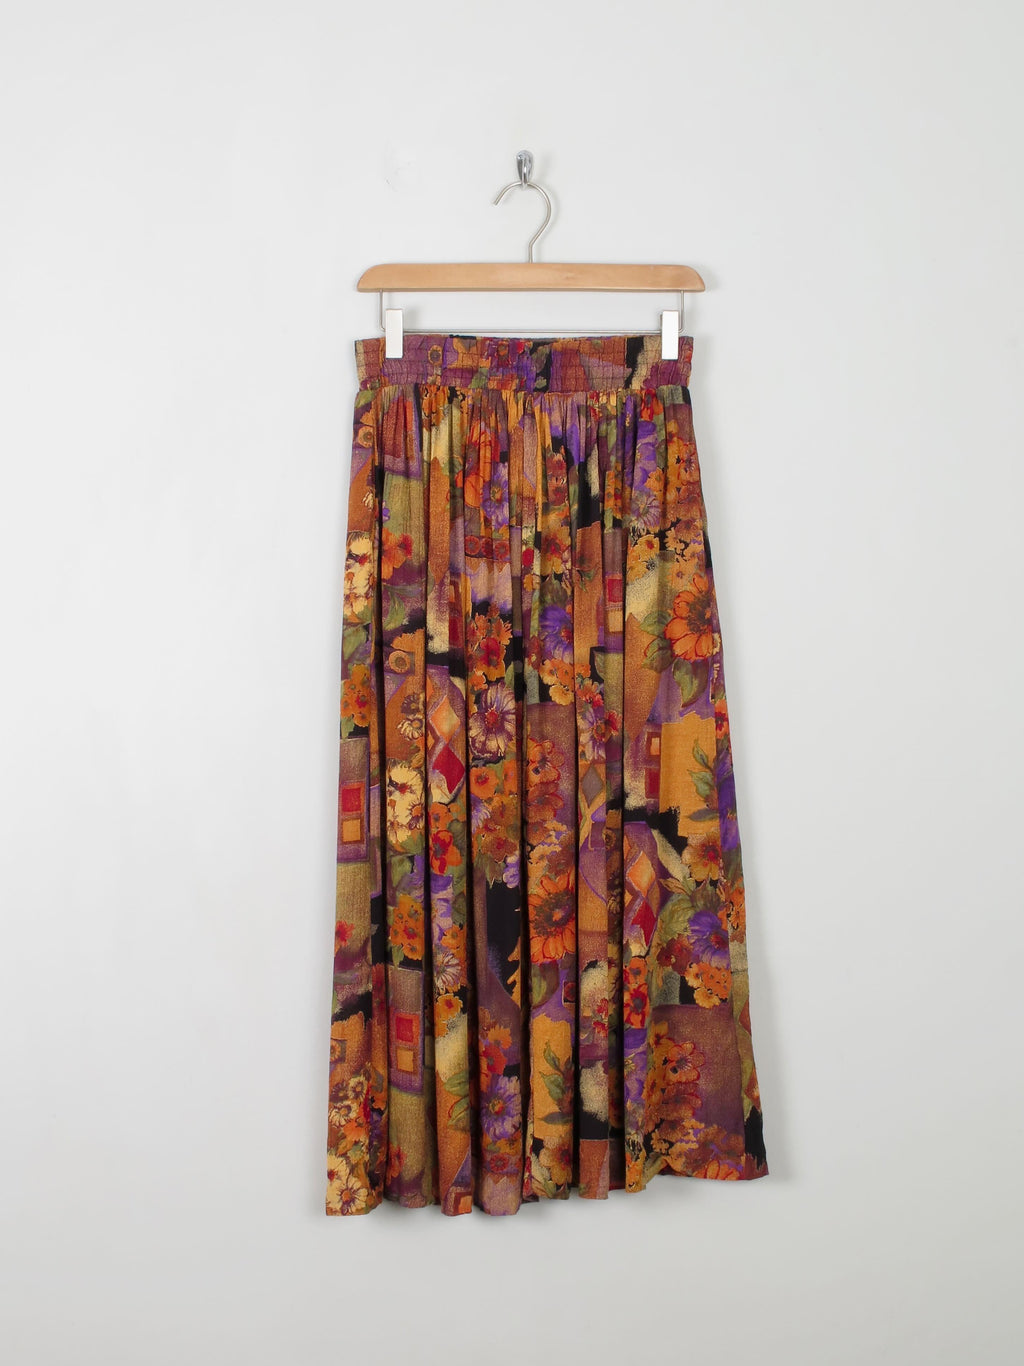 Colourful Vintage Midi Skirt With Elastic Waist S/M - The Harlequin